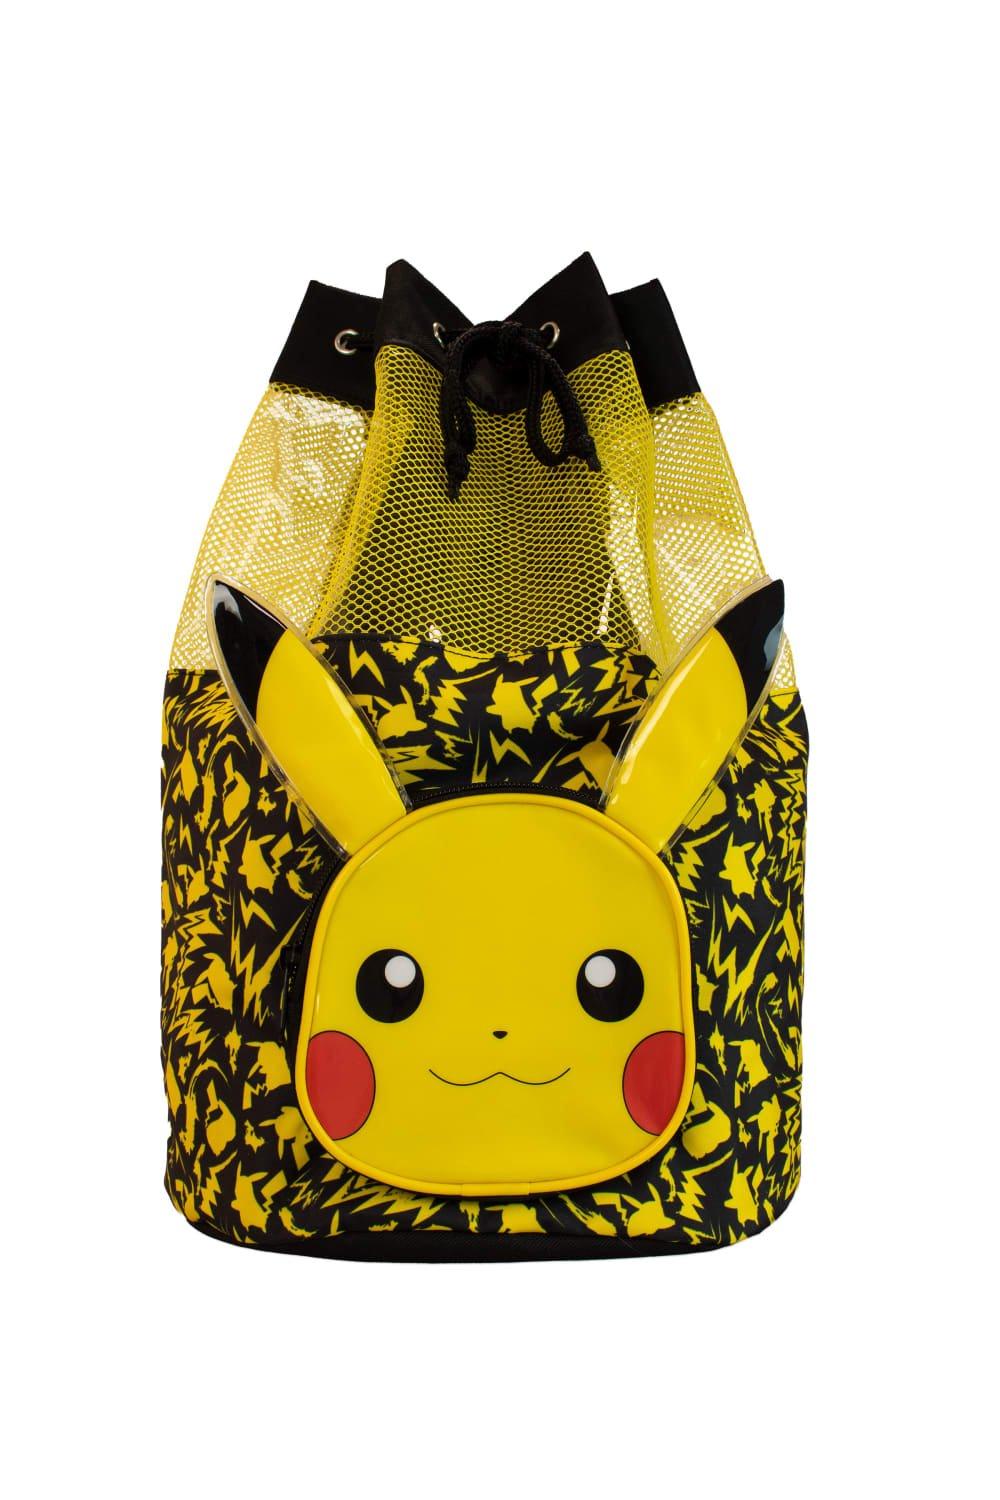 Сумка для плавания Пикачу Pokemon, желтый сумка девочка в пикачу свитере серый